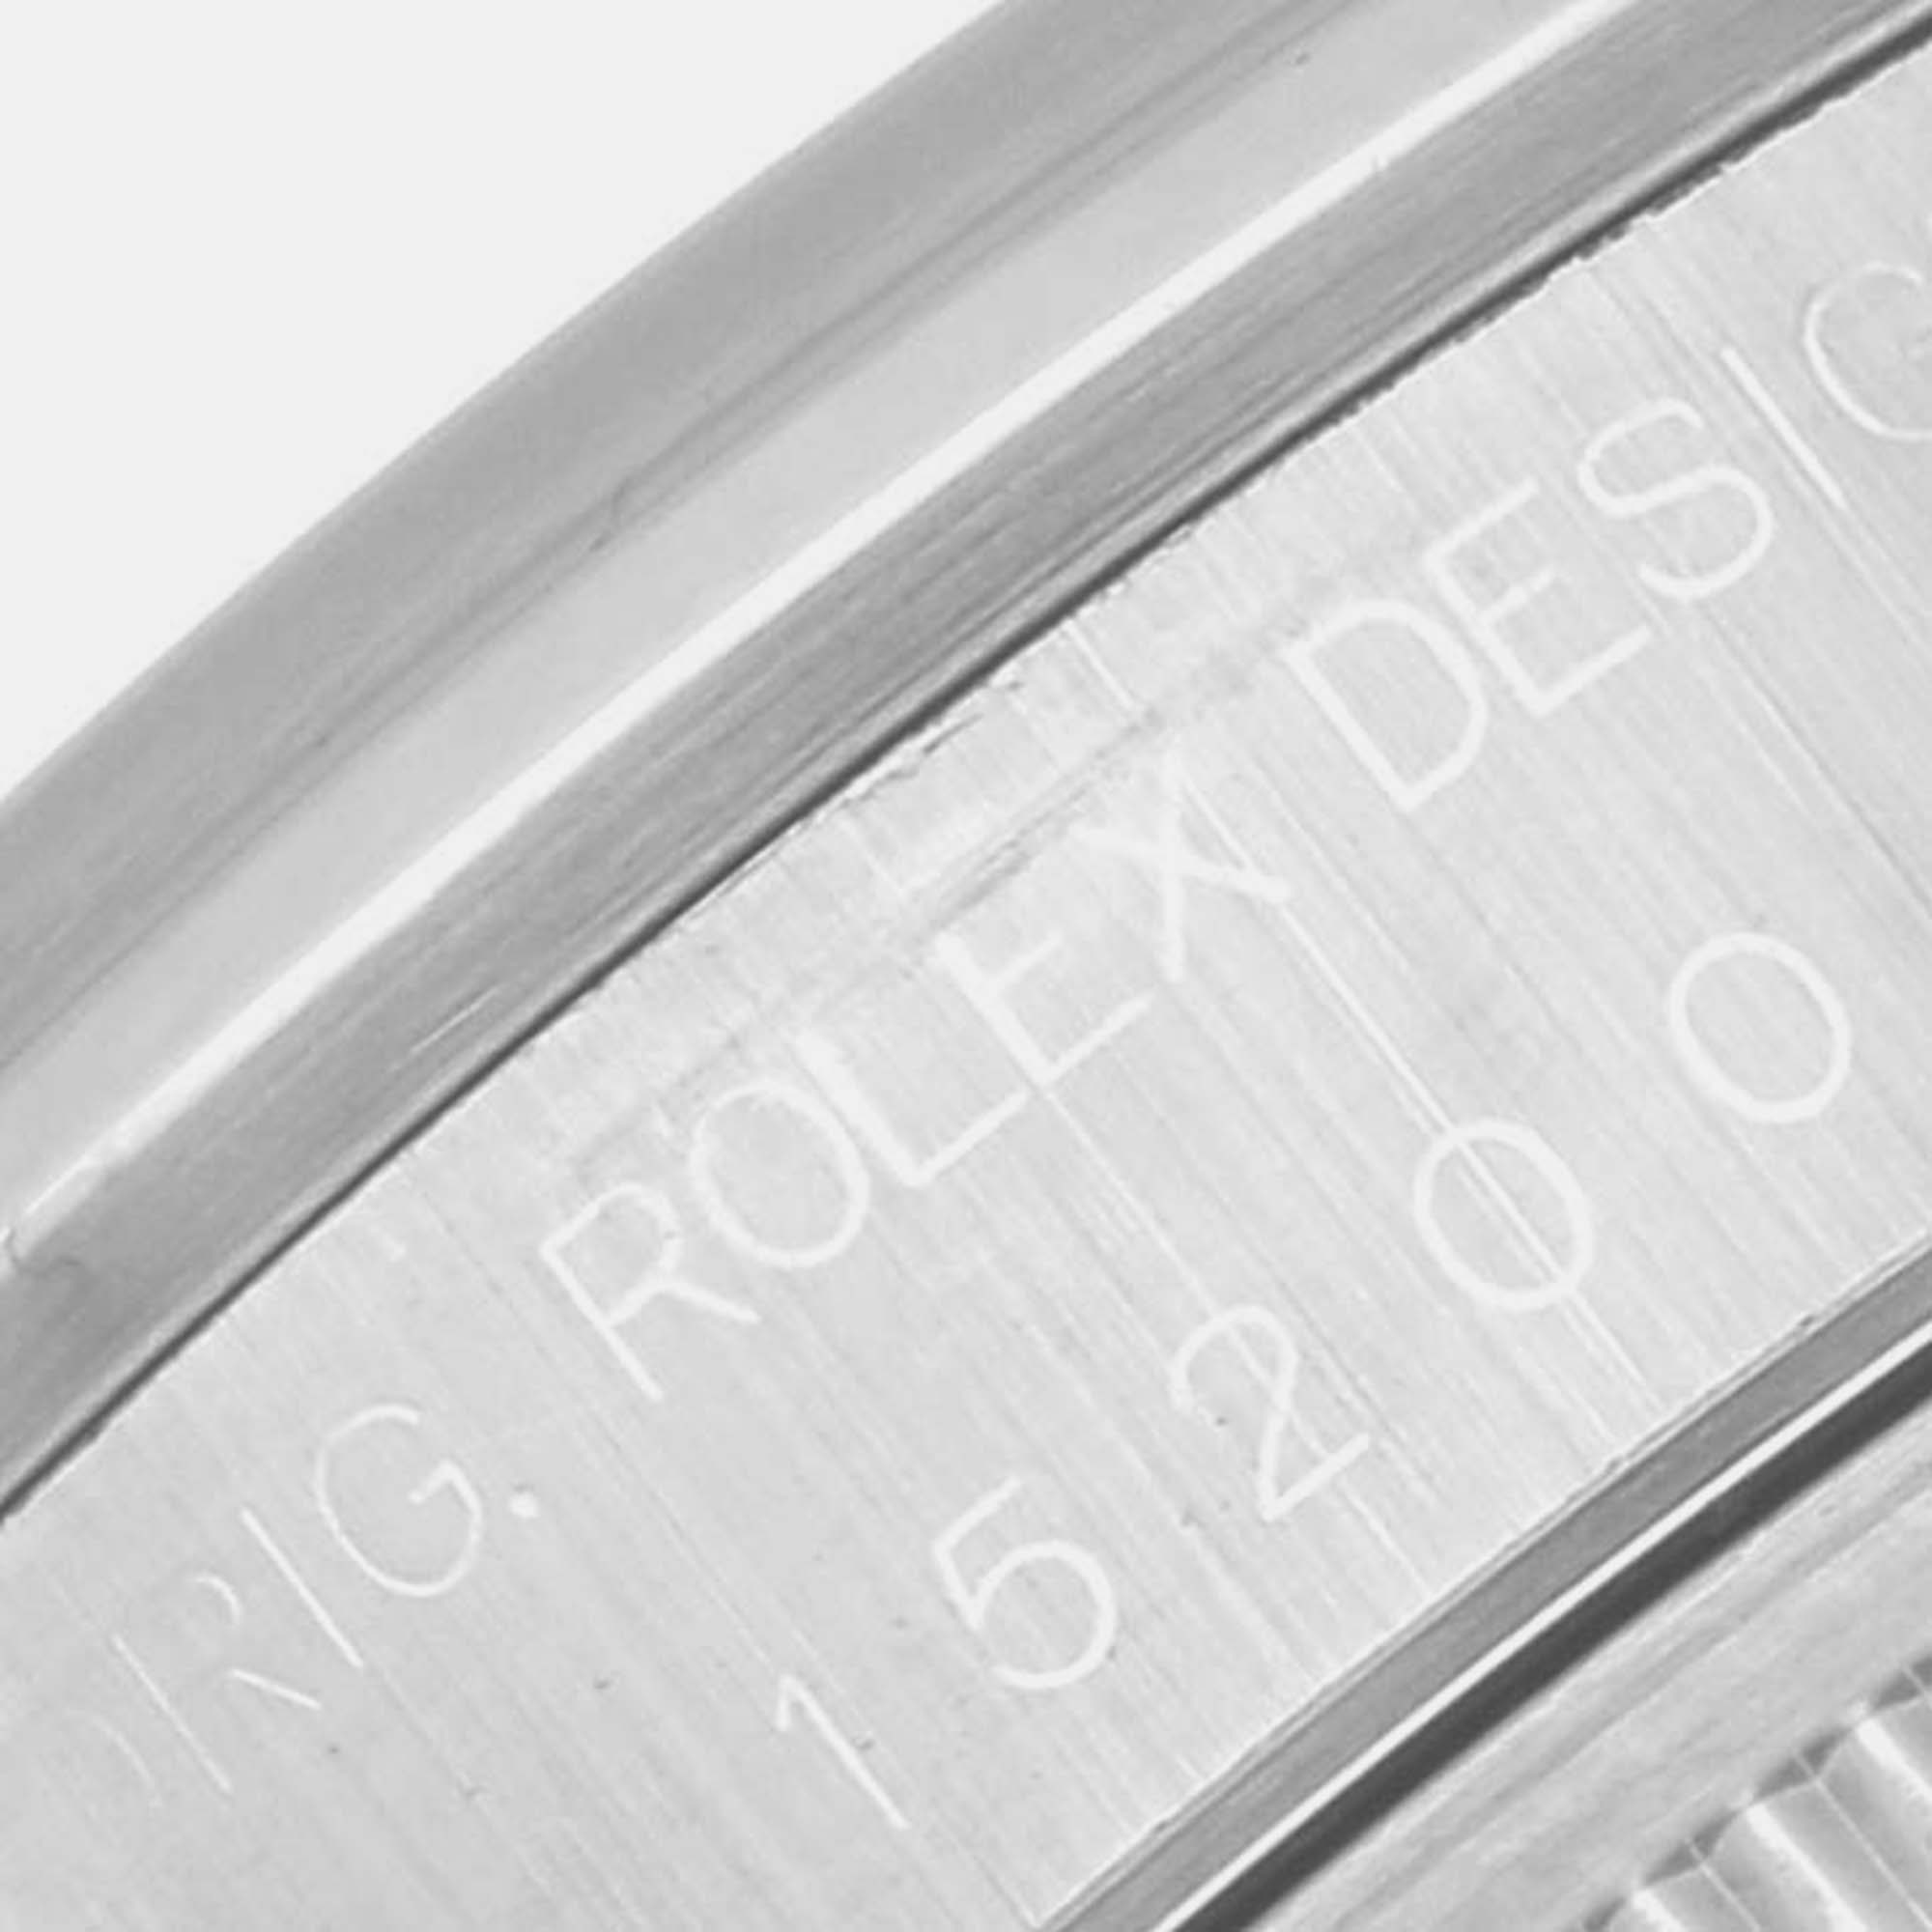 Rolex Date Blue Dial Smooth Bezel Steel Mens Watch 15200